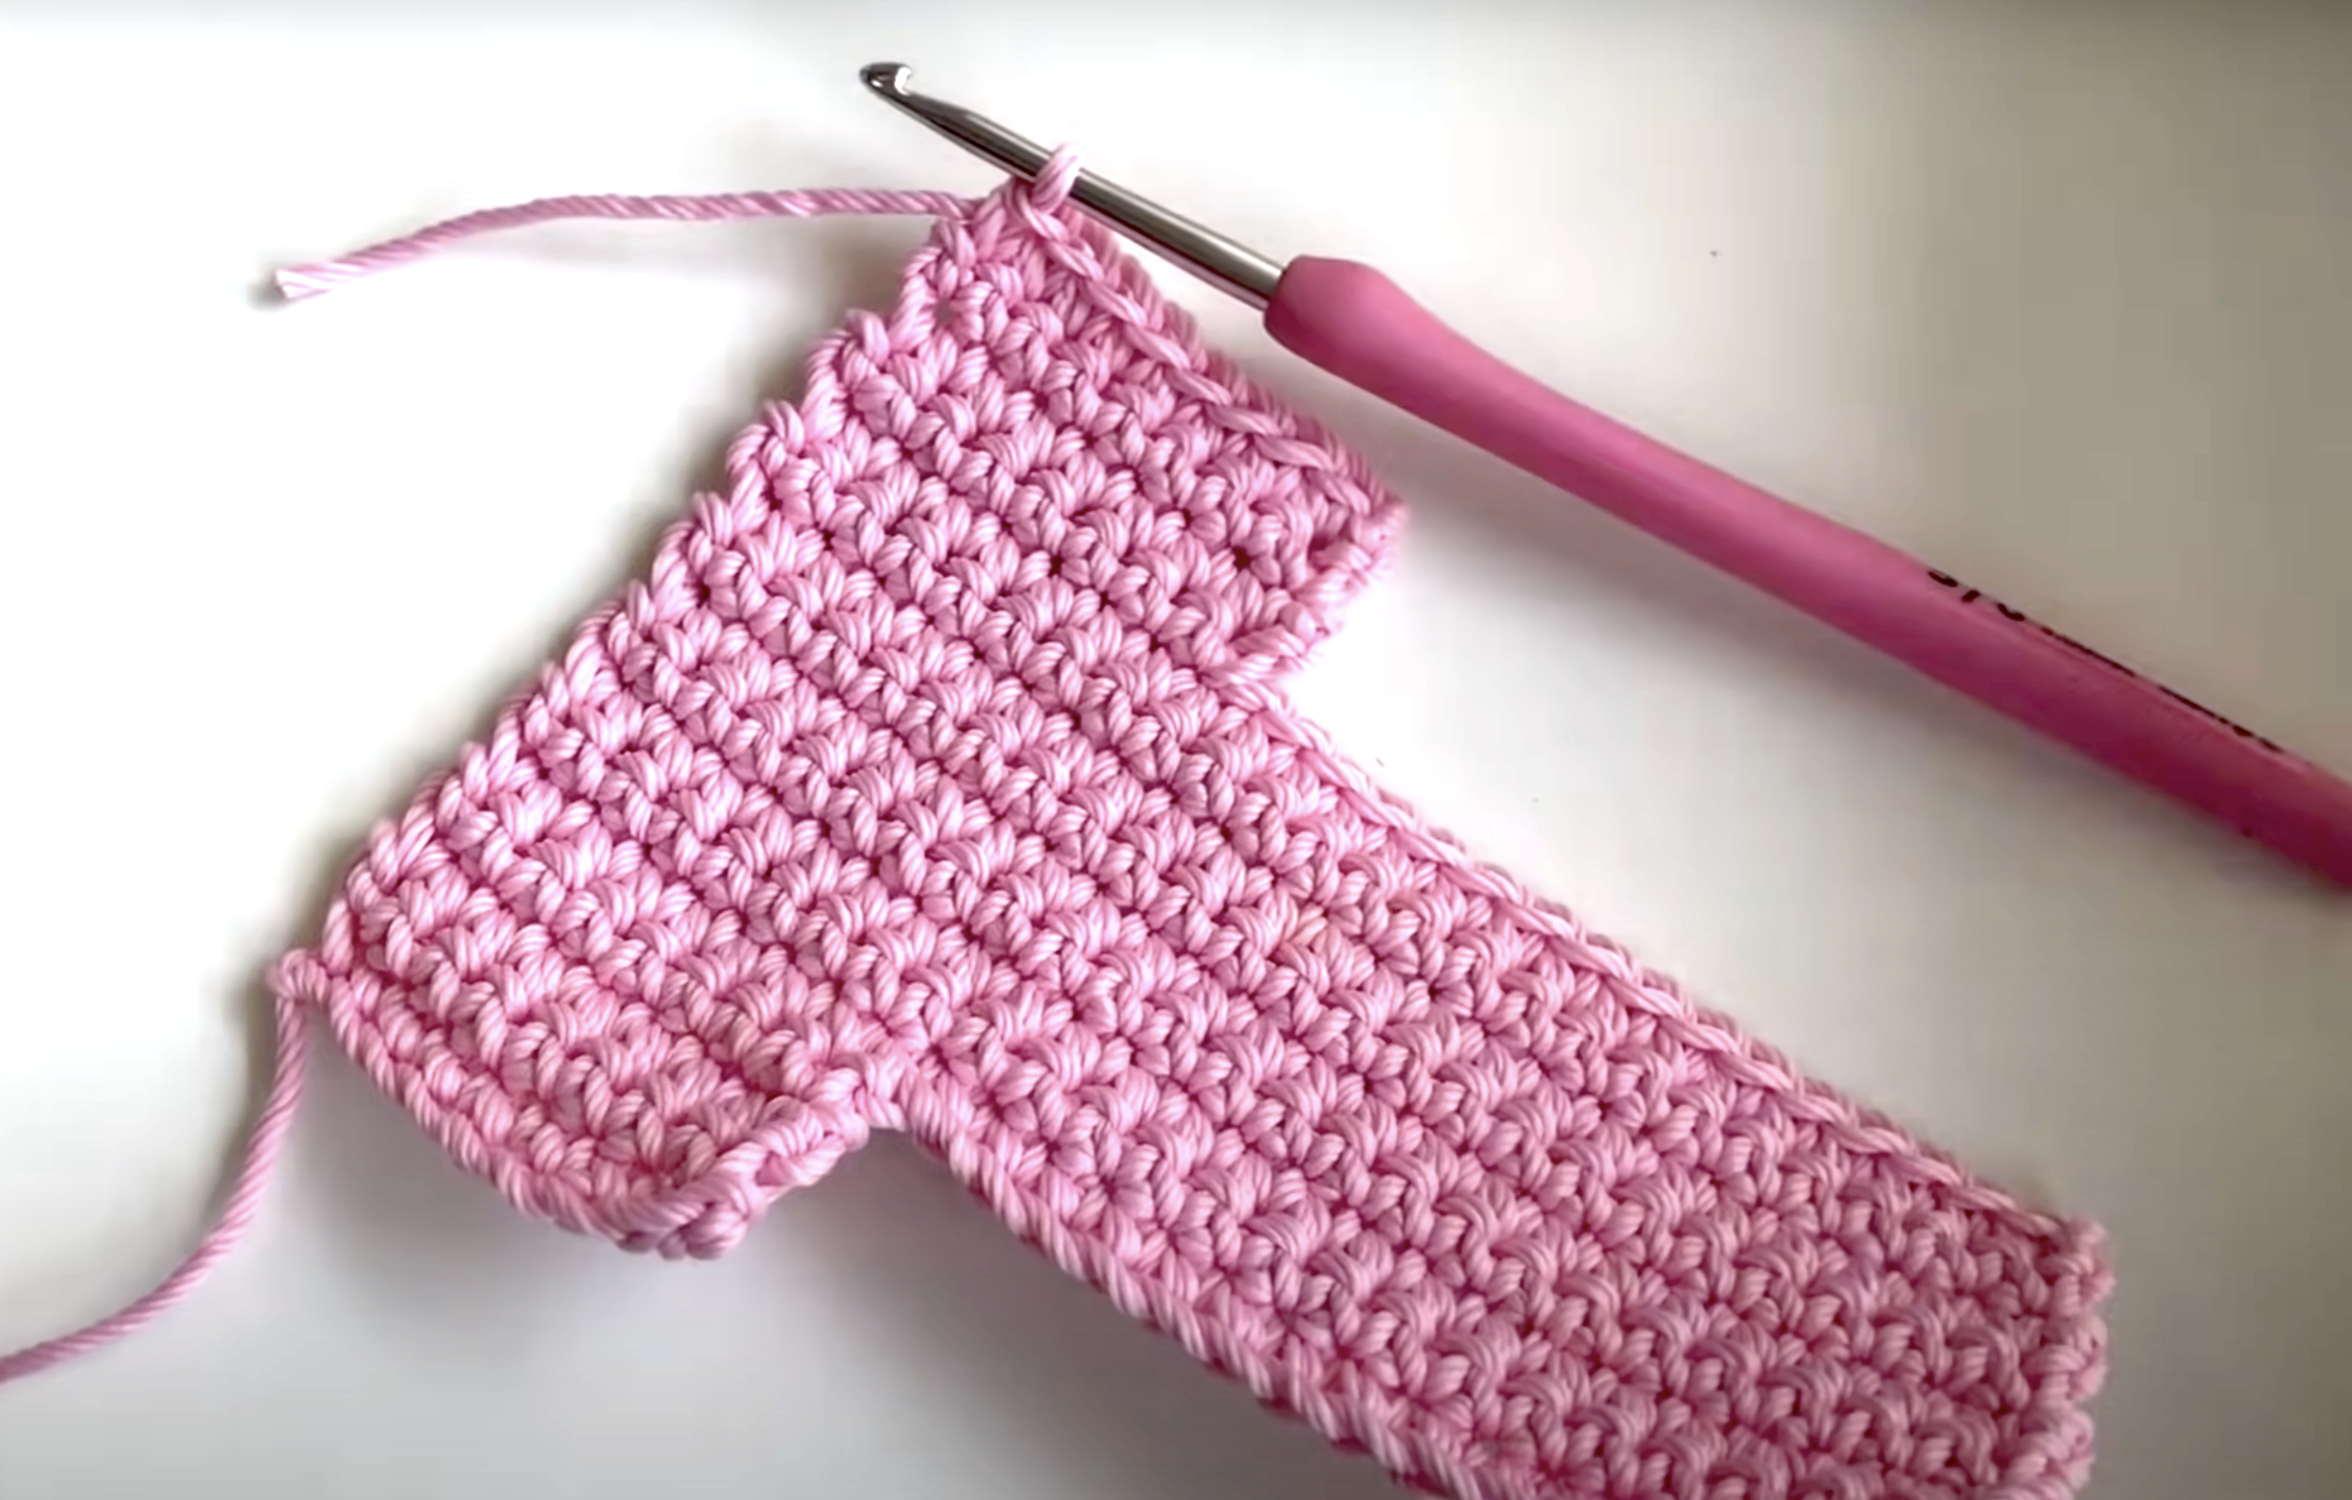 Making cute couch crochet amigurumi